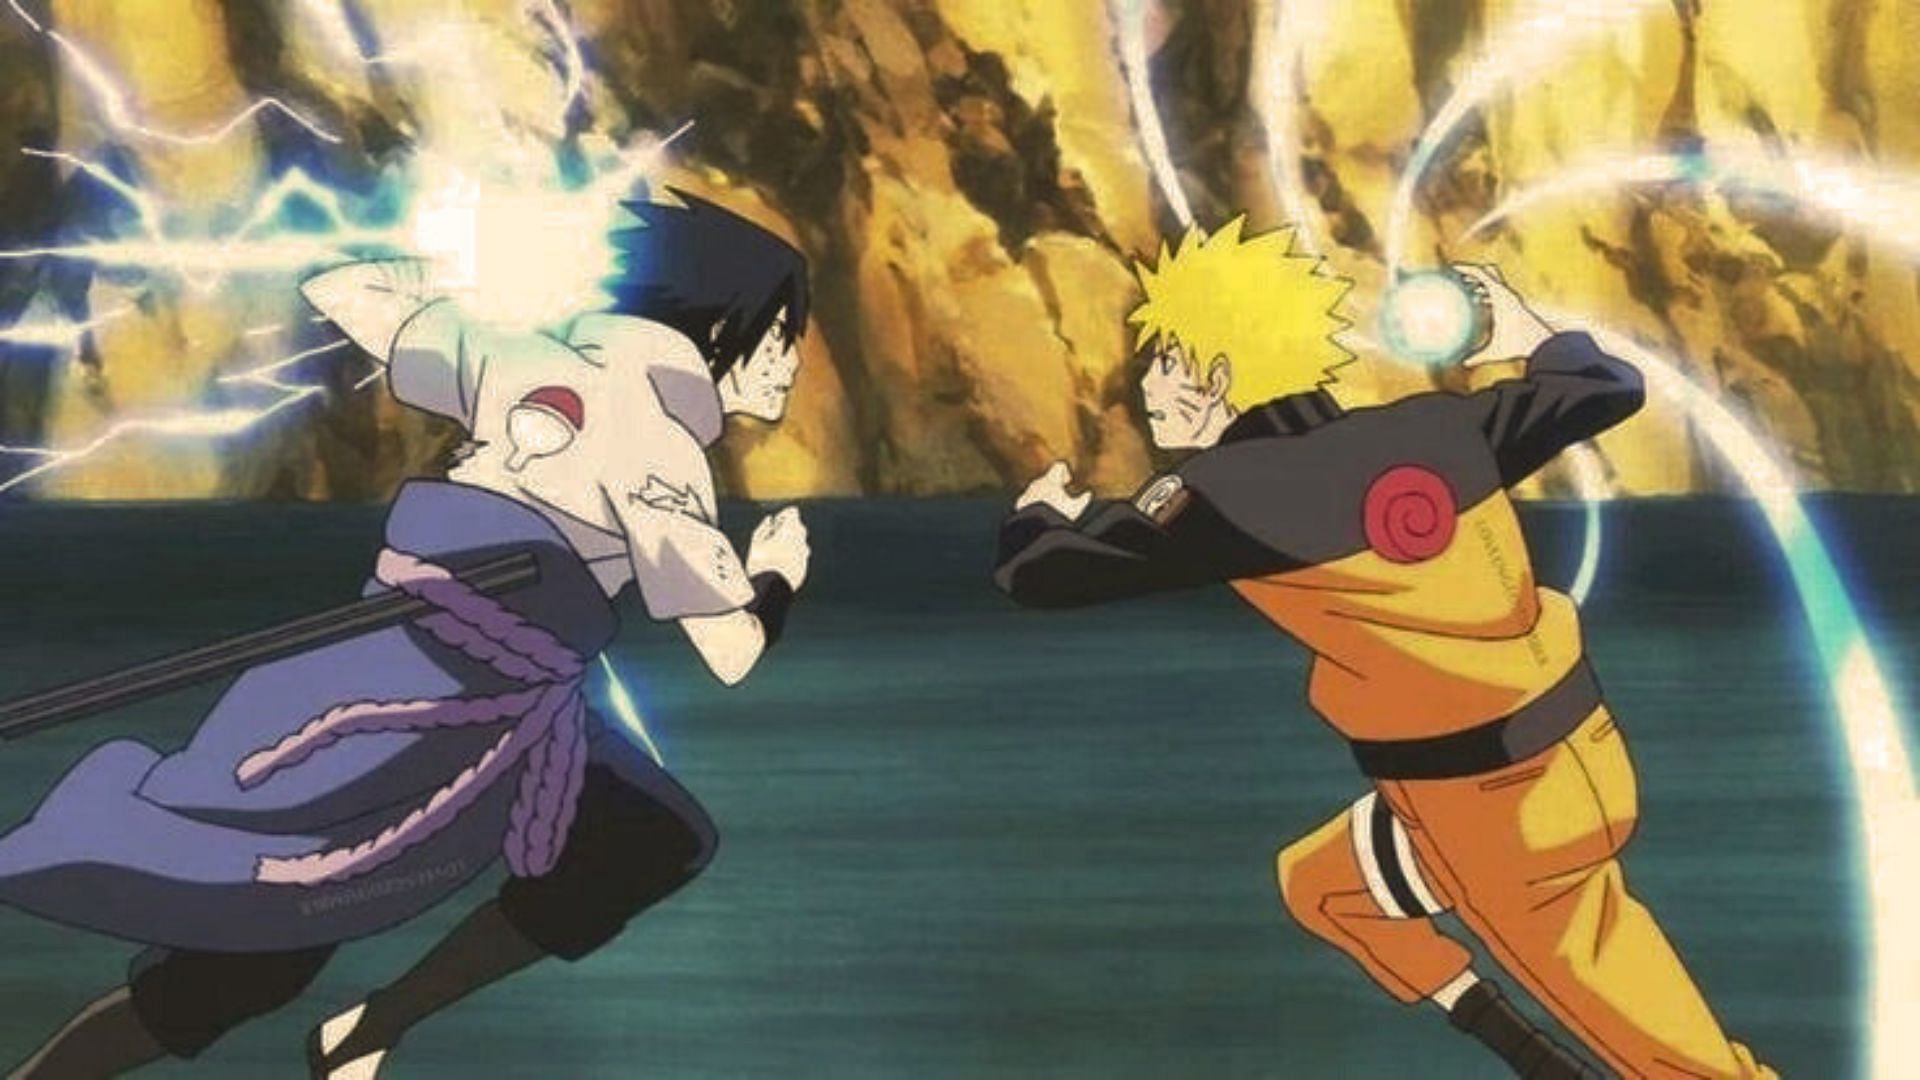 Naruto and Sasuke as shown in the anime (Image via Studio Pierrot)